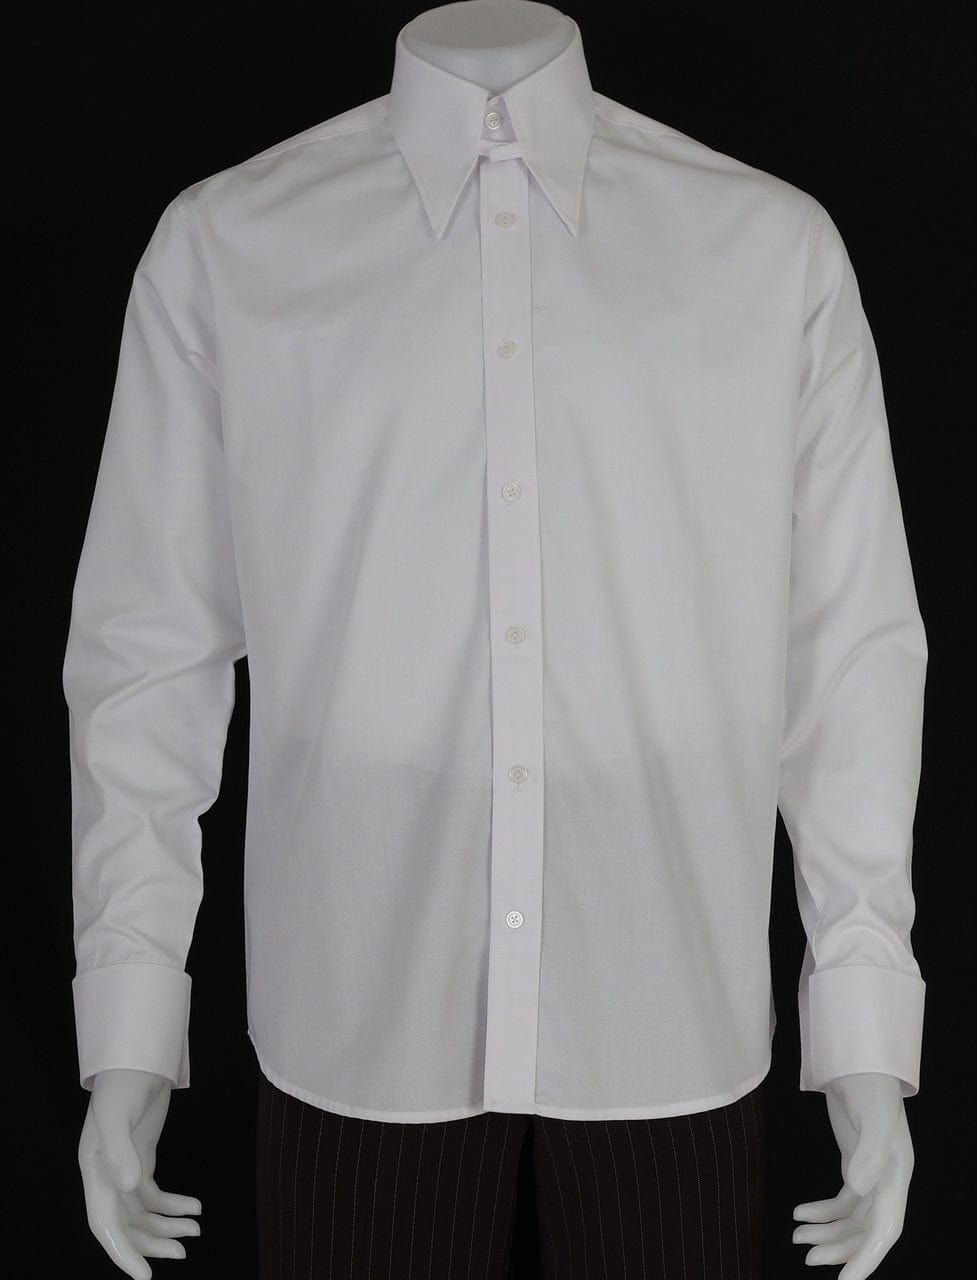 Men's White Tab Collar Shirt - Casual Shirt & Formal Shirt ...